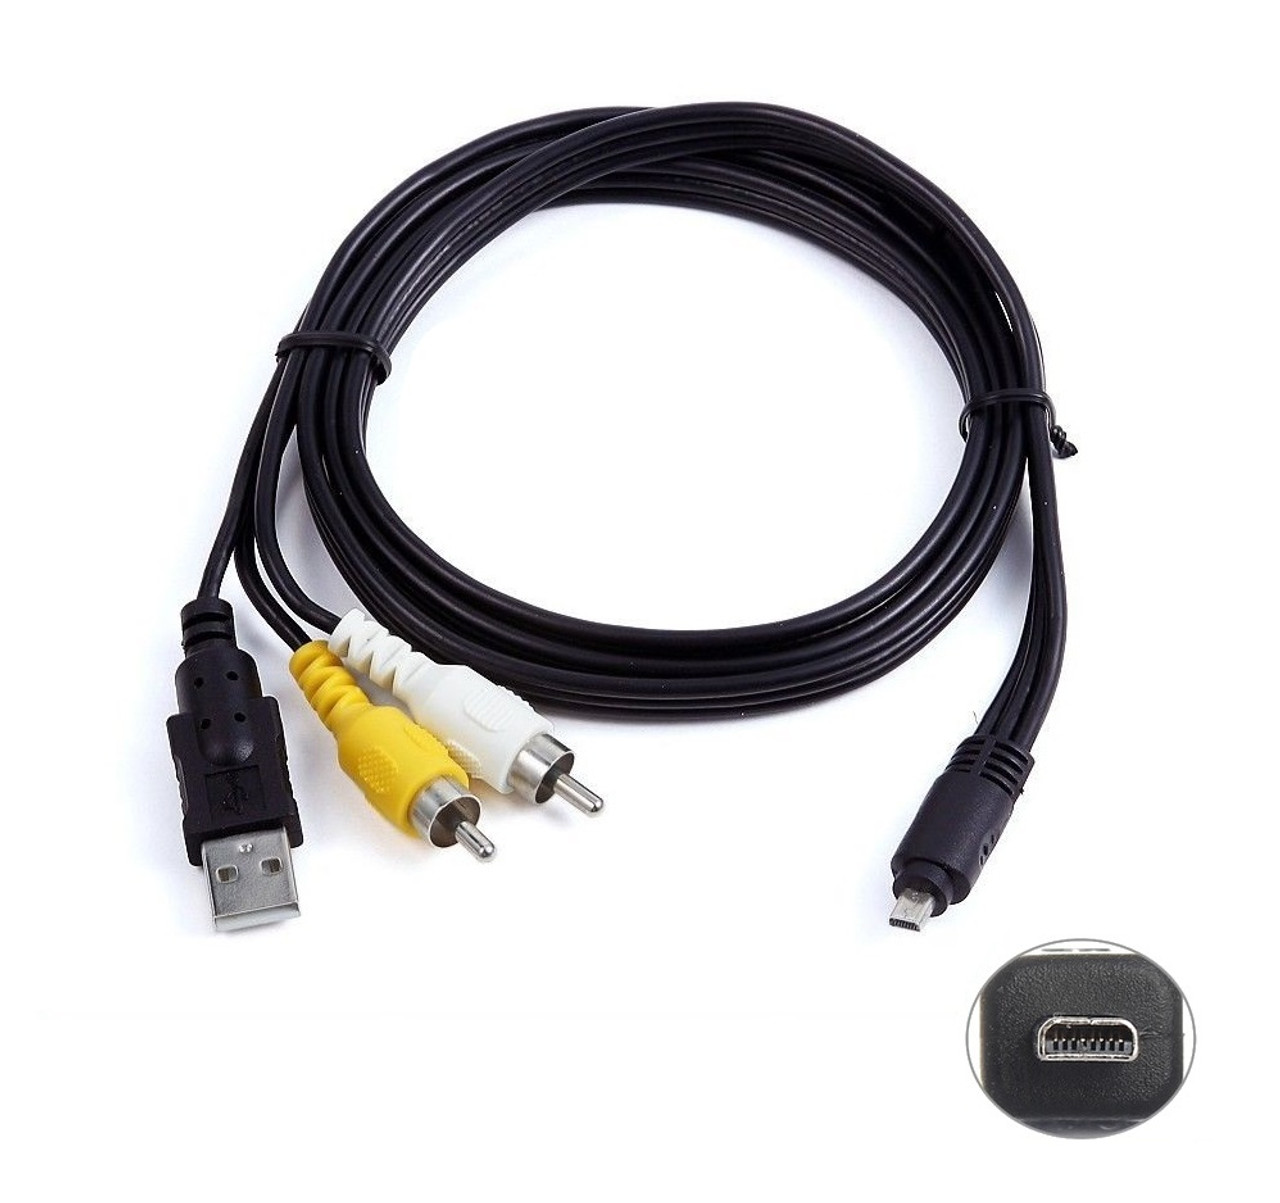 USB AV 3in1 Cable Audio Video Data Sync Power Charging Cord For Sanyo Xacti Sony Cybershot Pentax Optio Digital Cameras